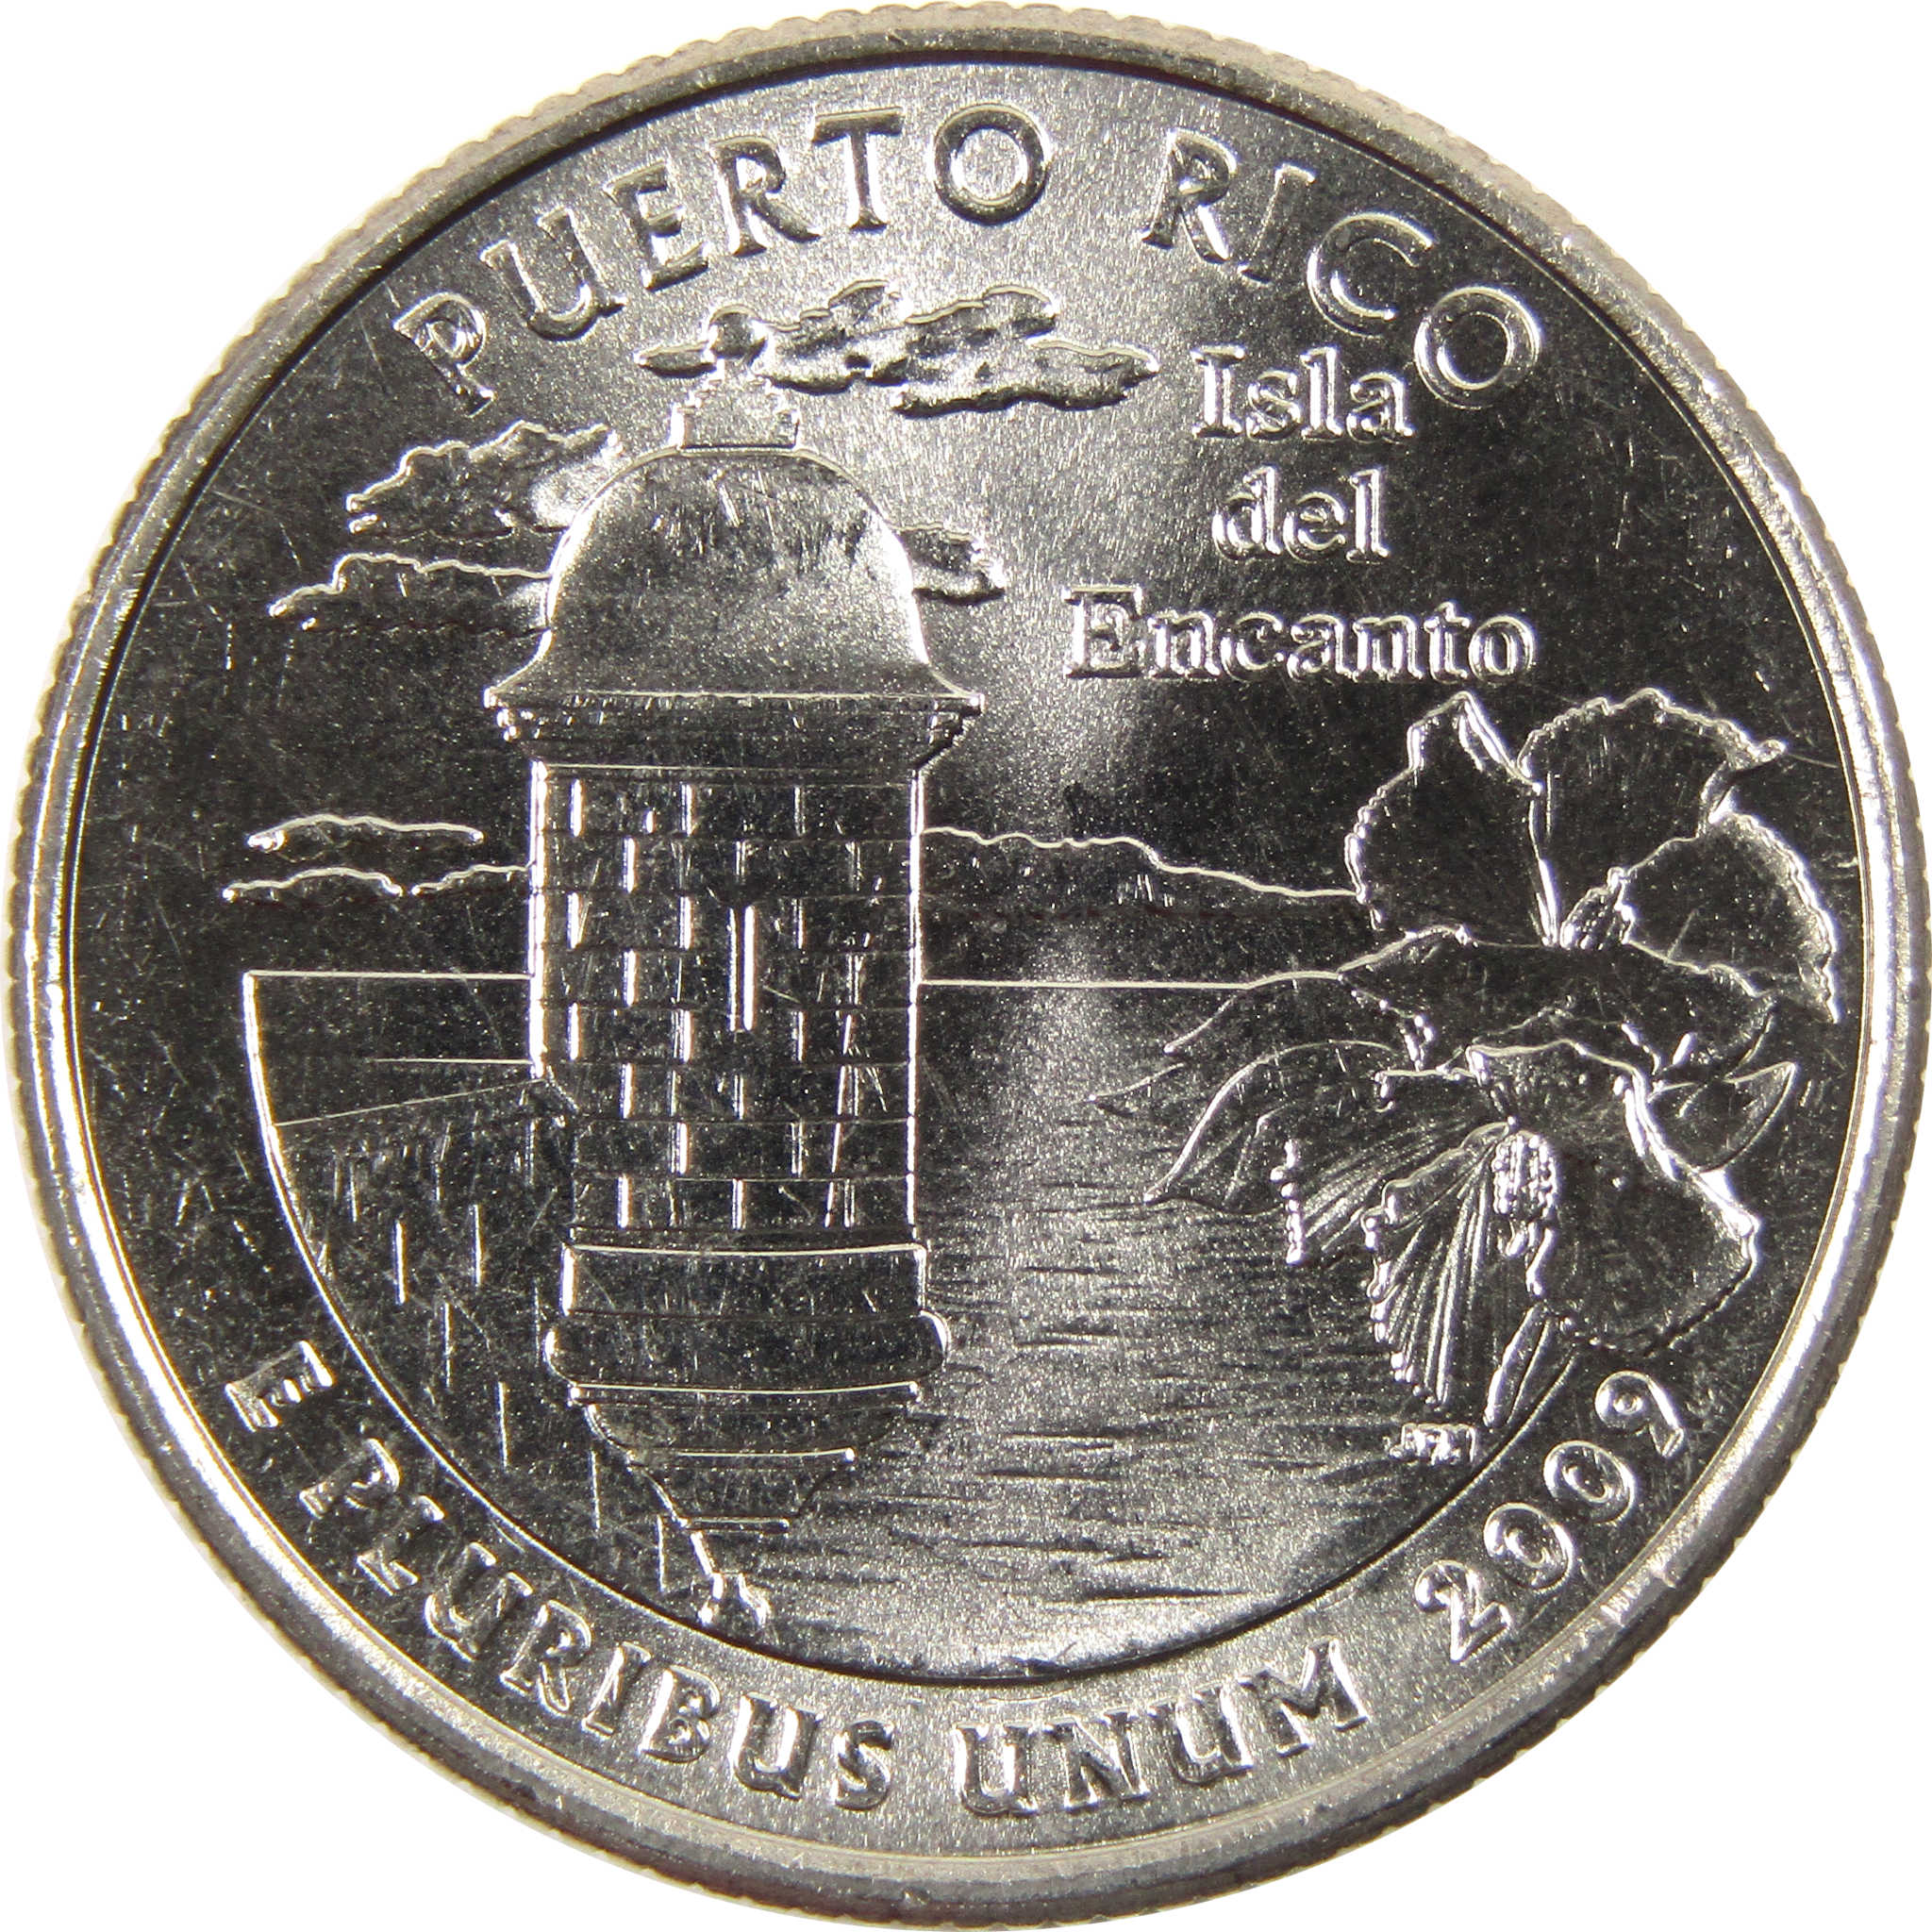 2009 D Puerto Rico Territories Quarter BU Uncirculated Clad 25c Coin